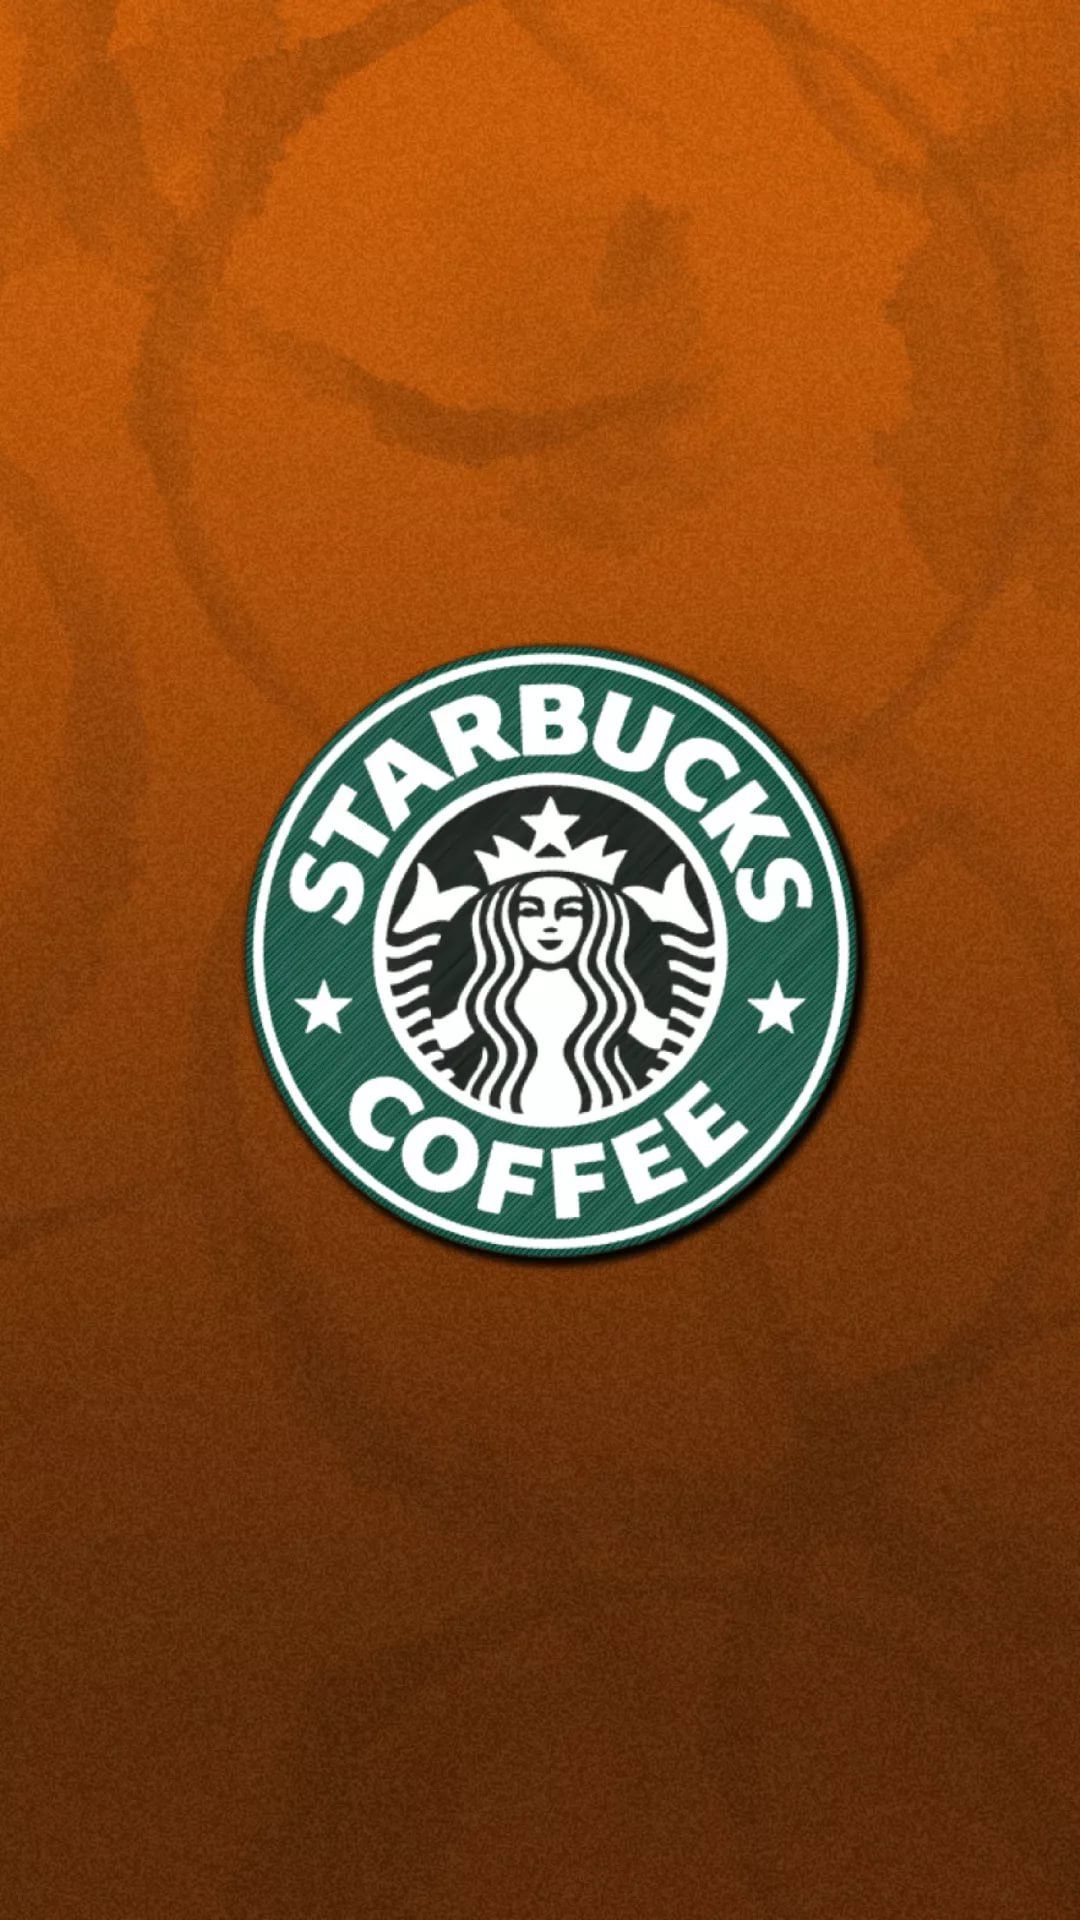 Starbucks Background Image